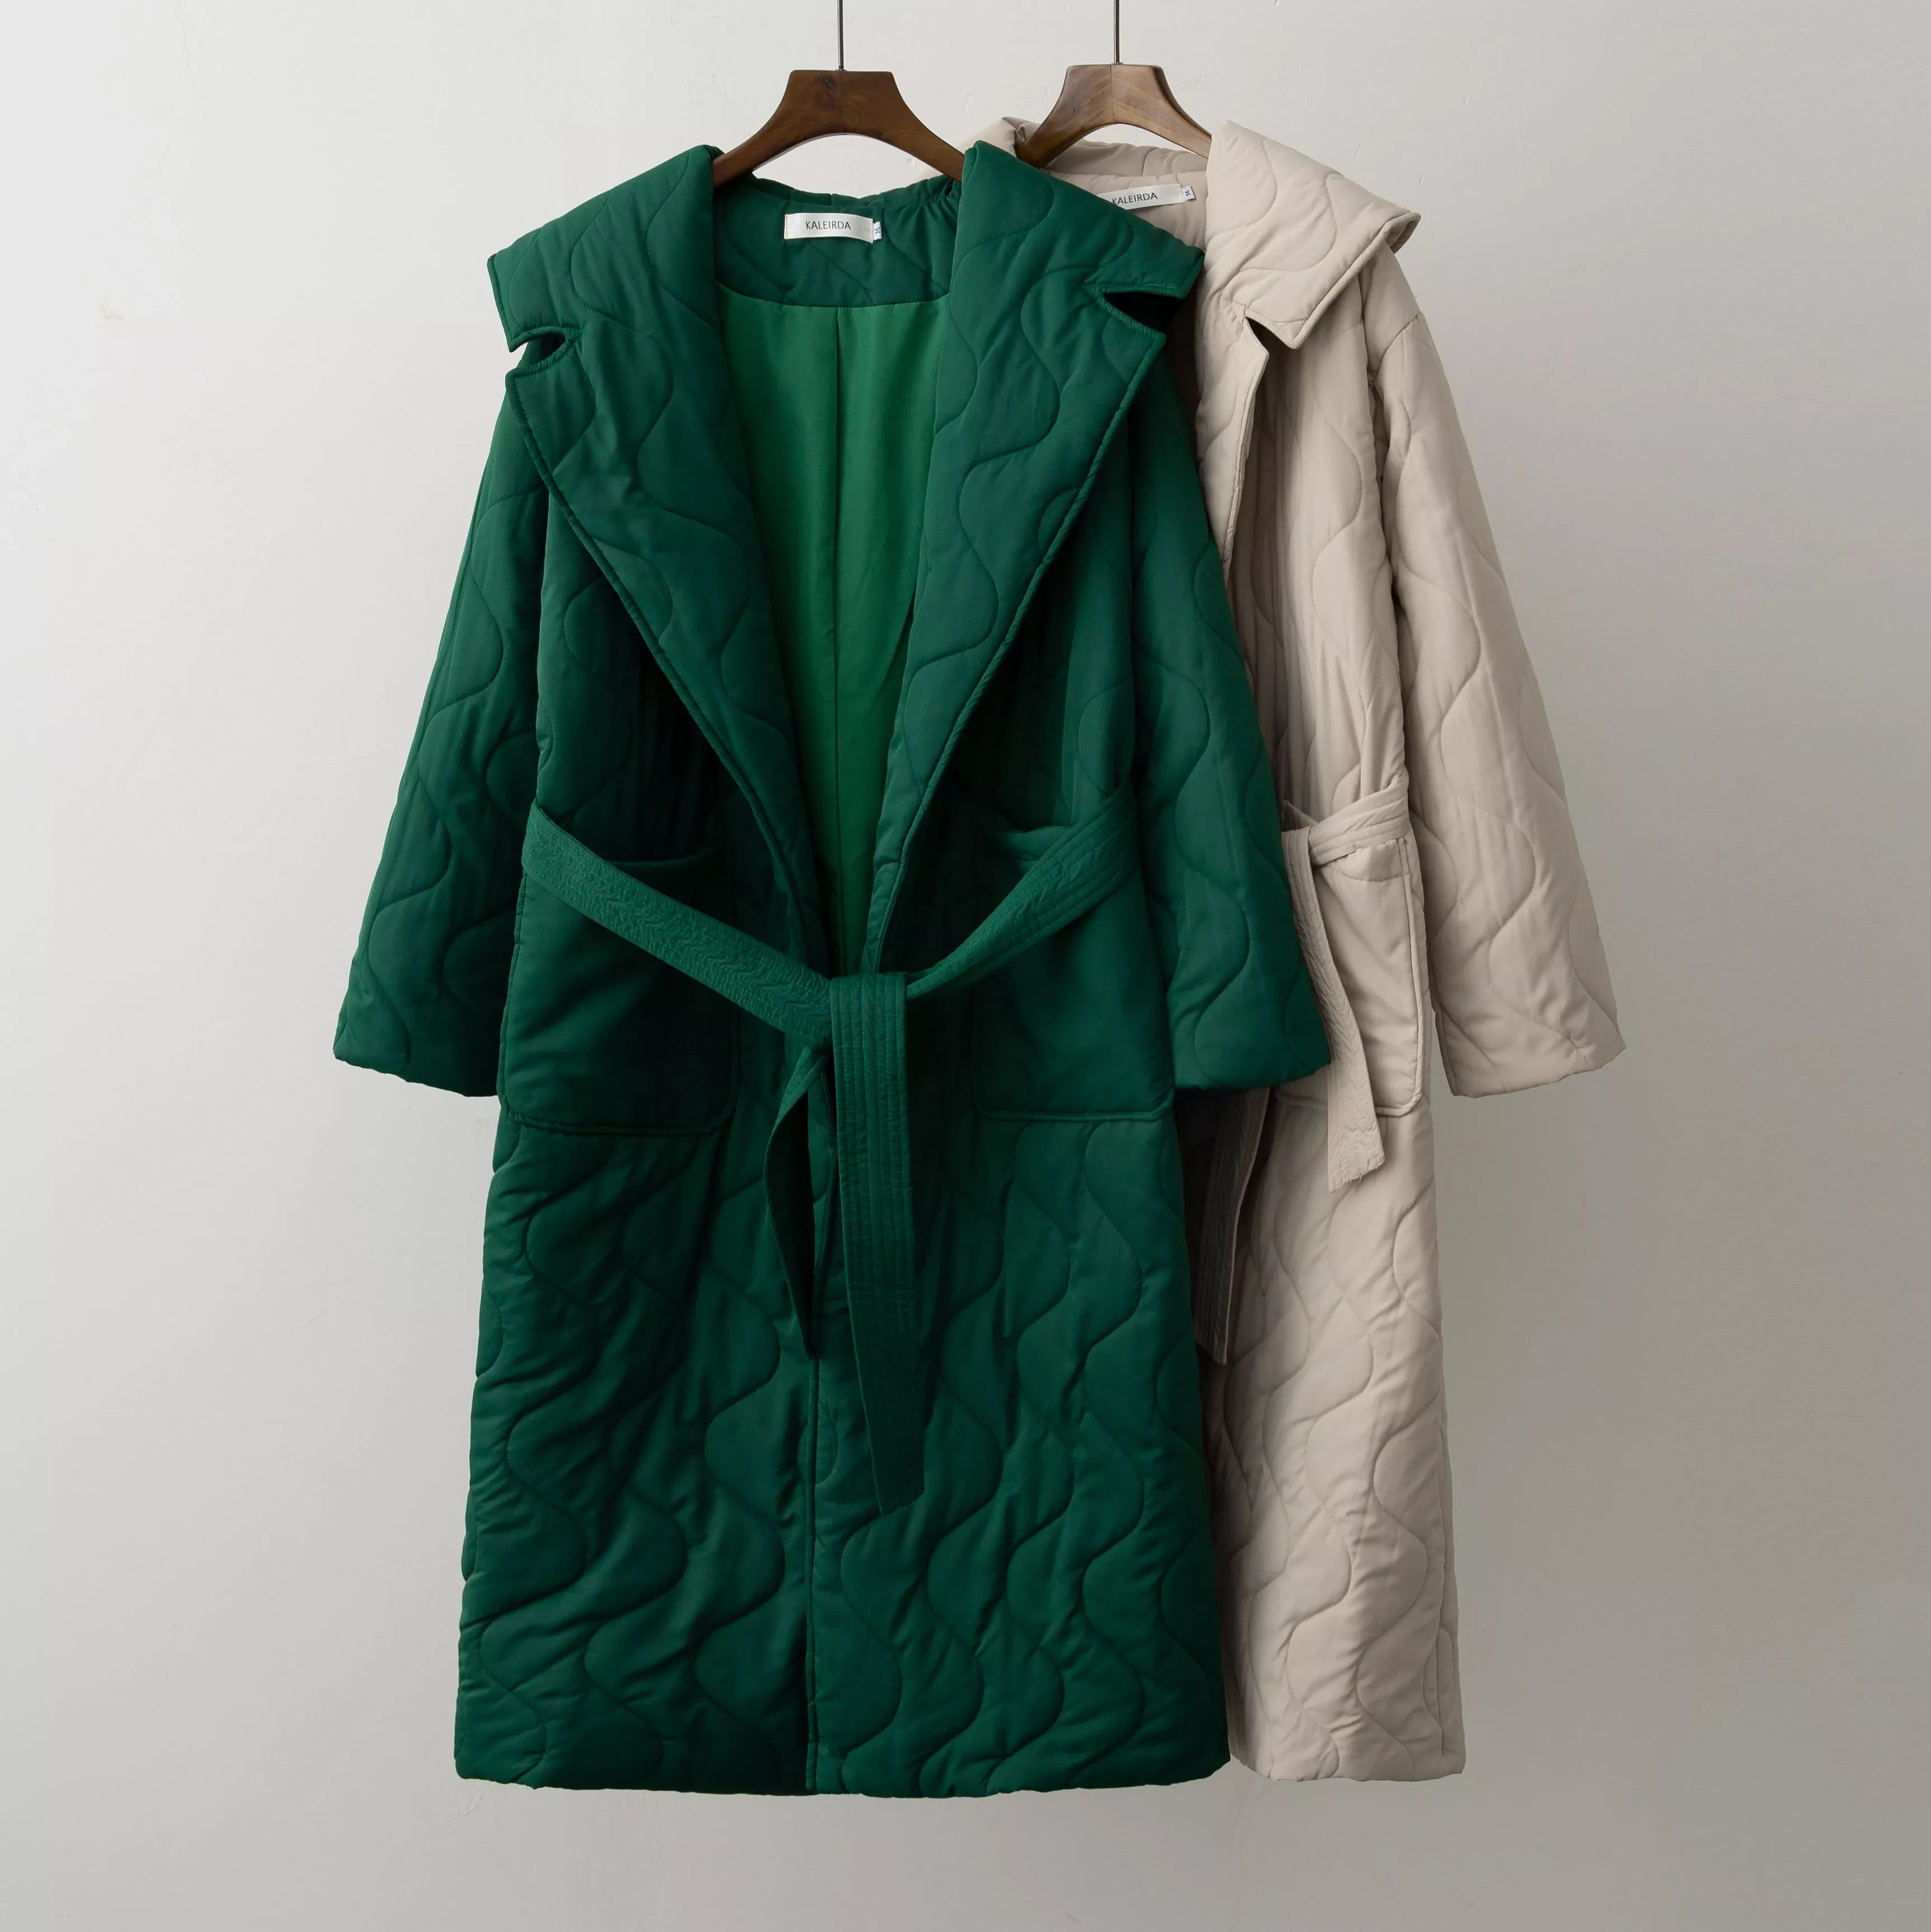 Winter coat rhombus pattern Casual sashes women parkas Deep pockets tailored collar stylish outerwear